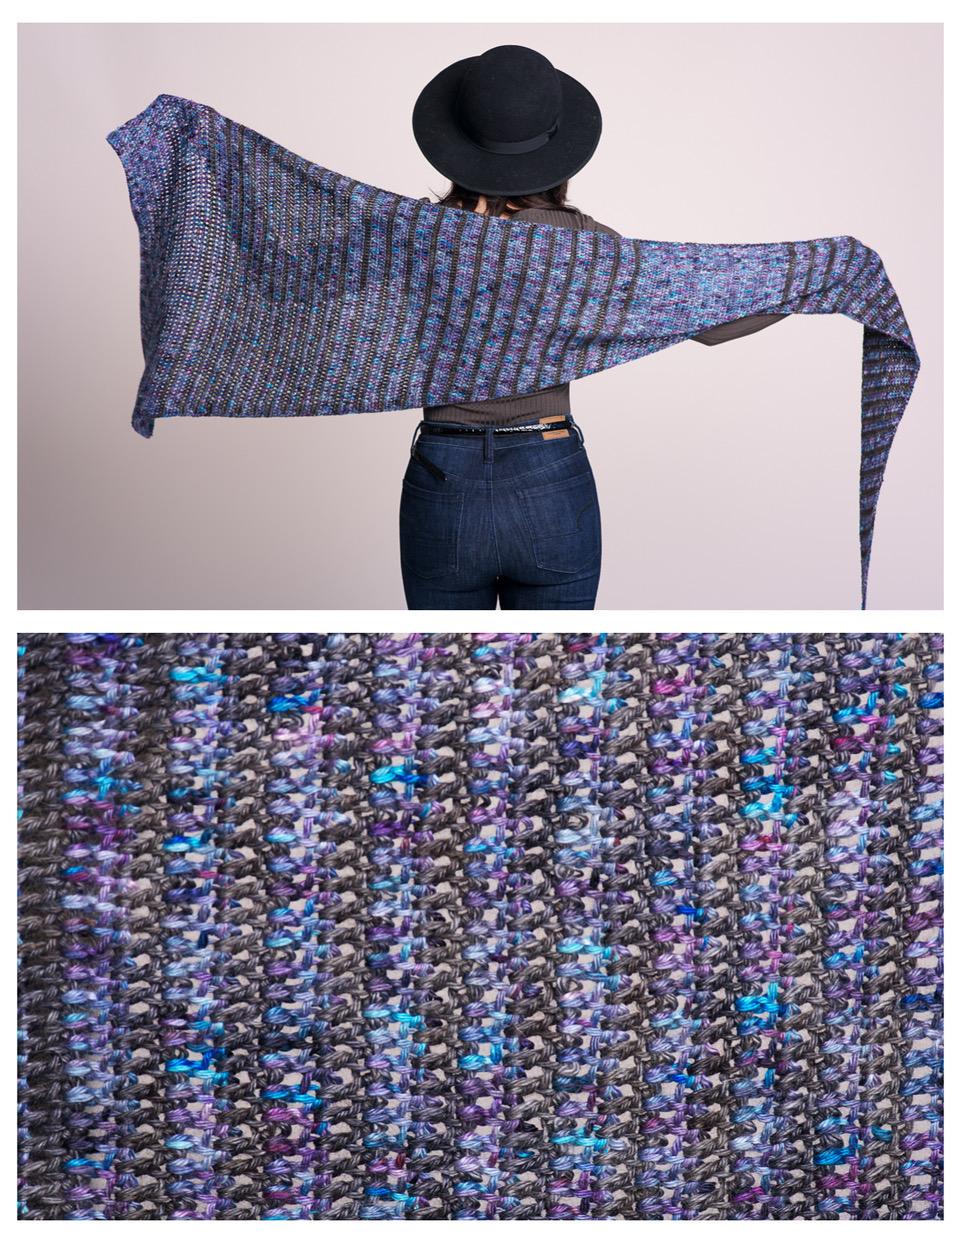 double crochet triangle shawl pattern